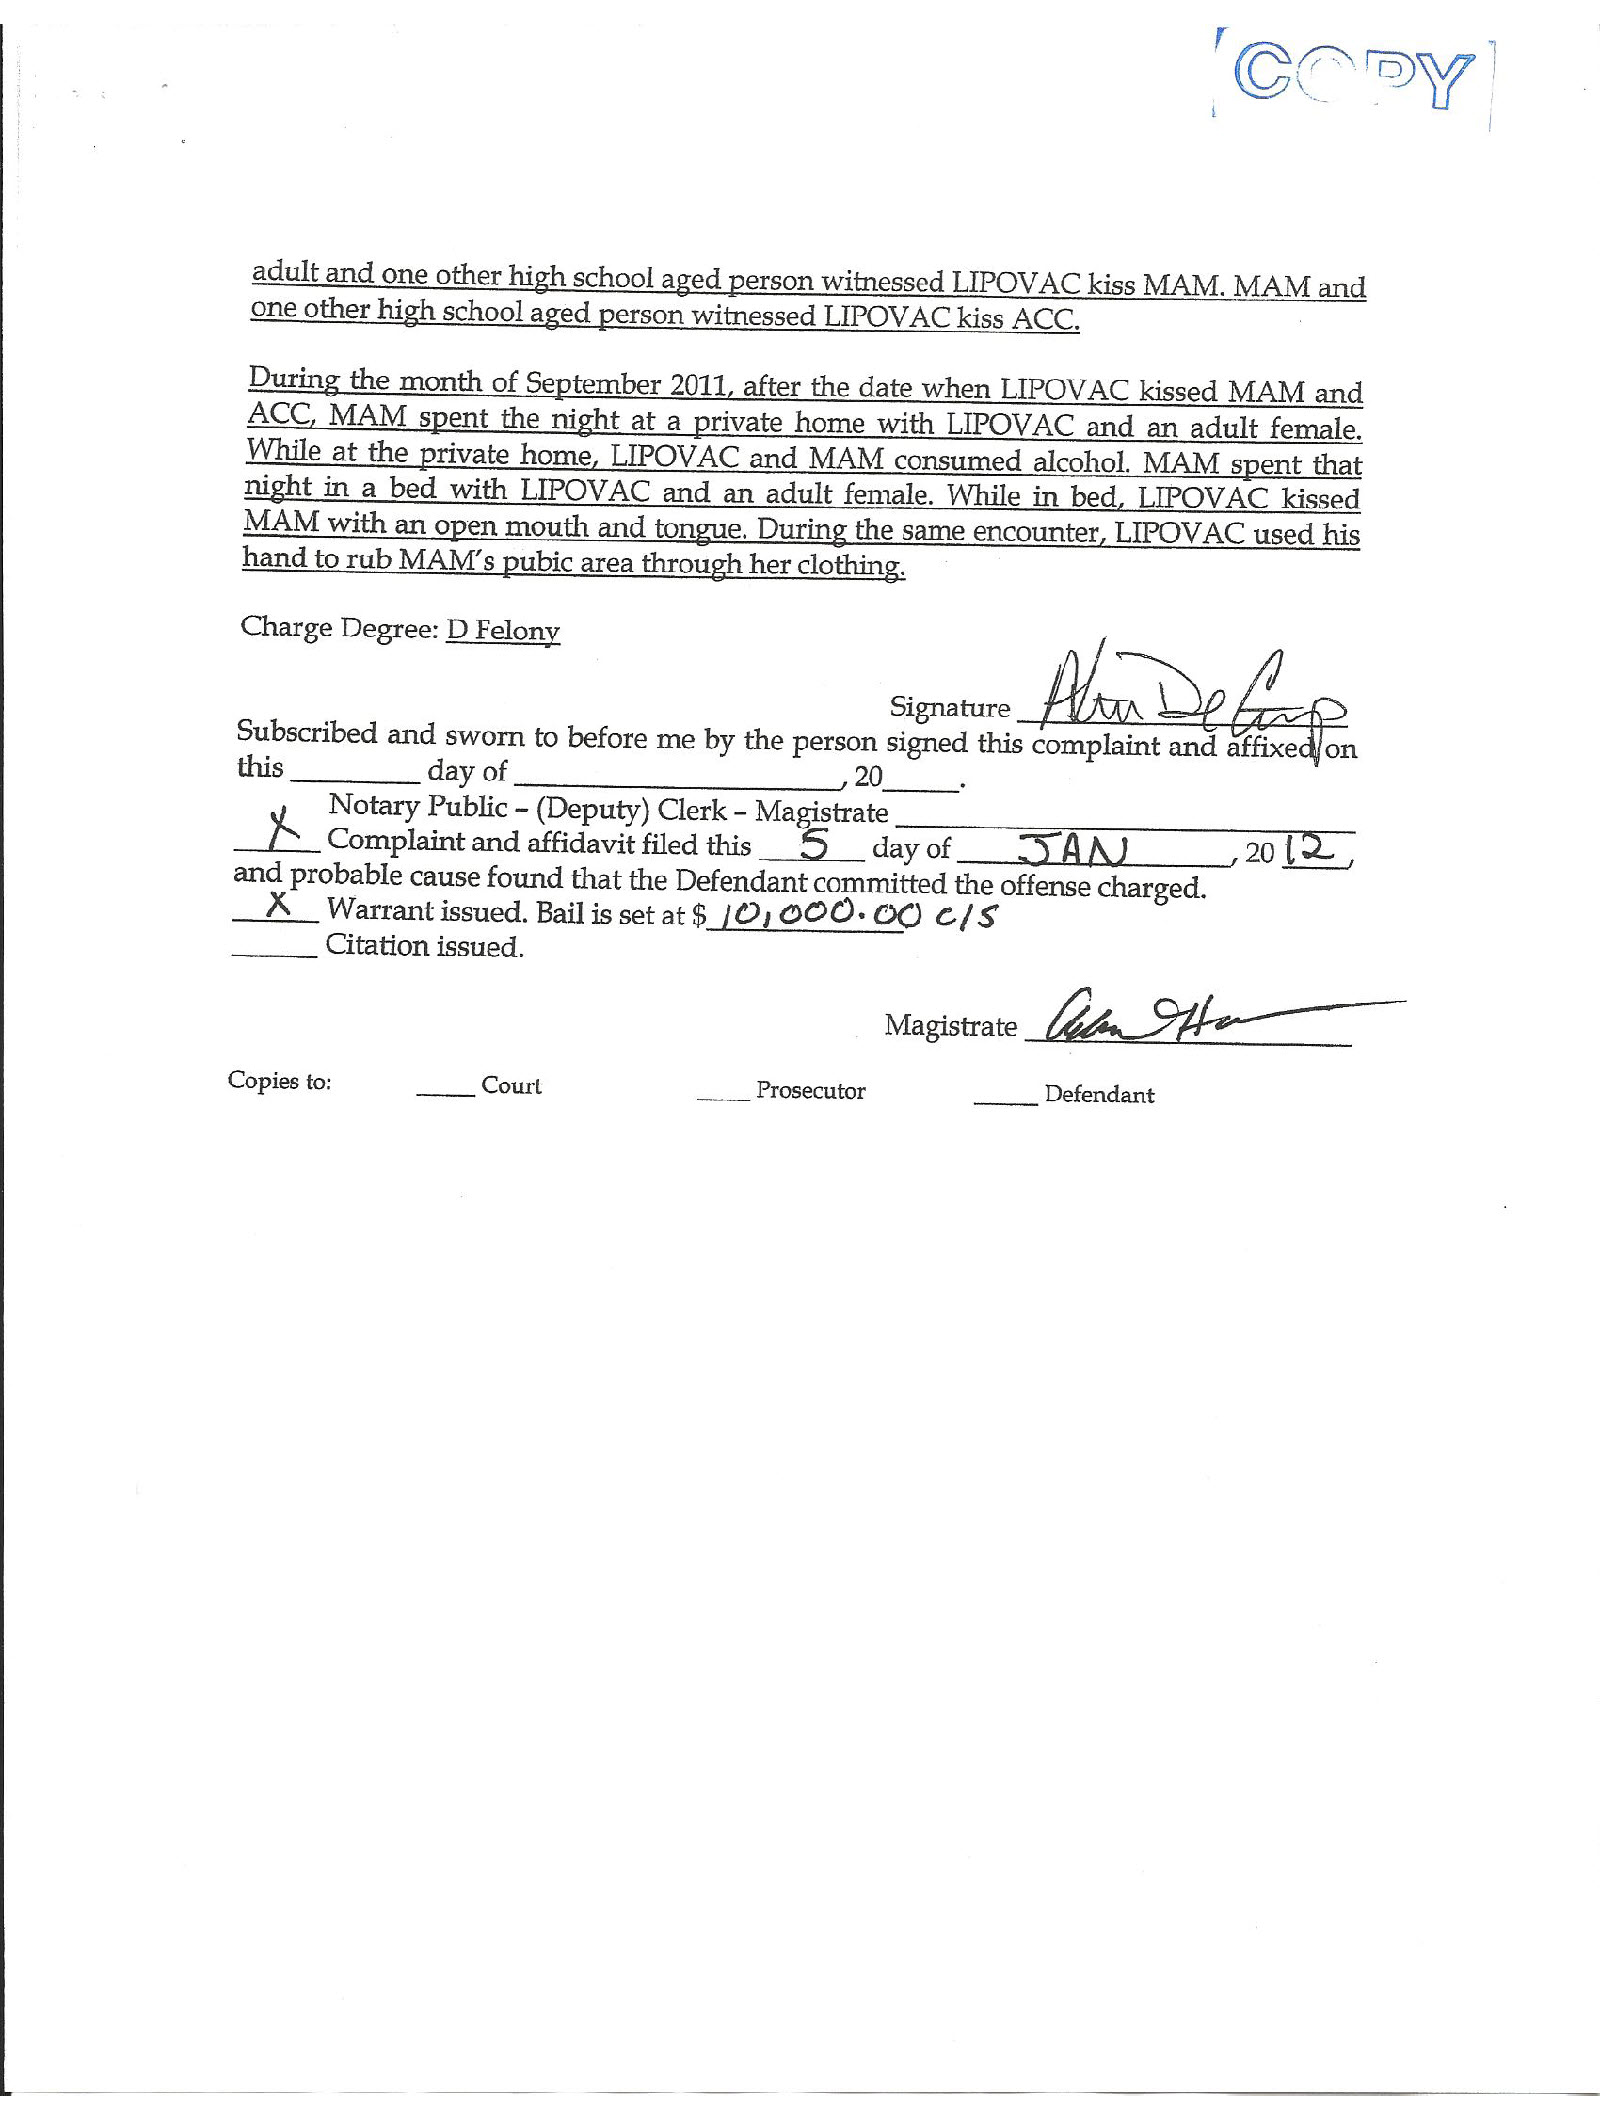 Copy of lipovac drew christopher arrest warrant3.jpg